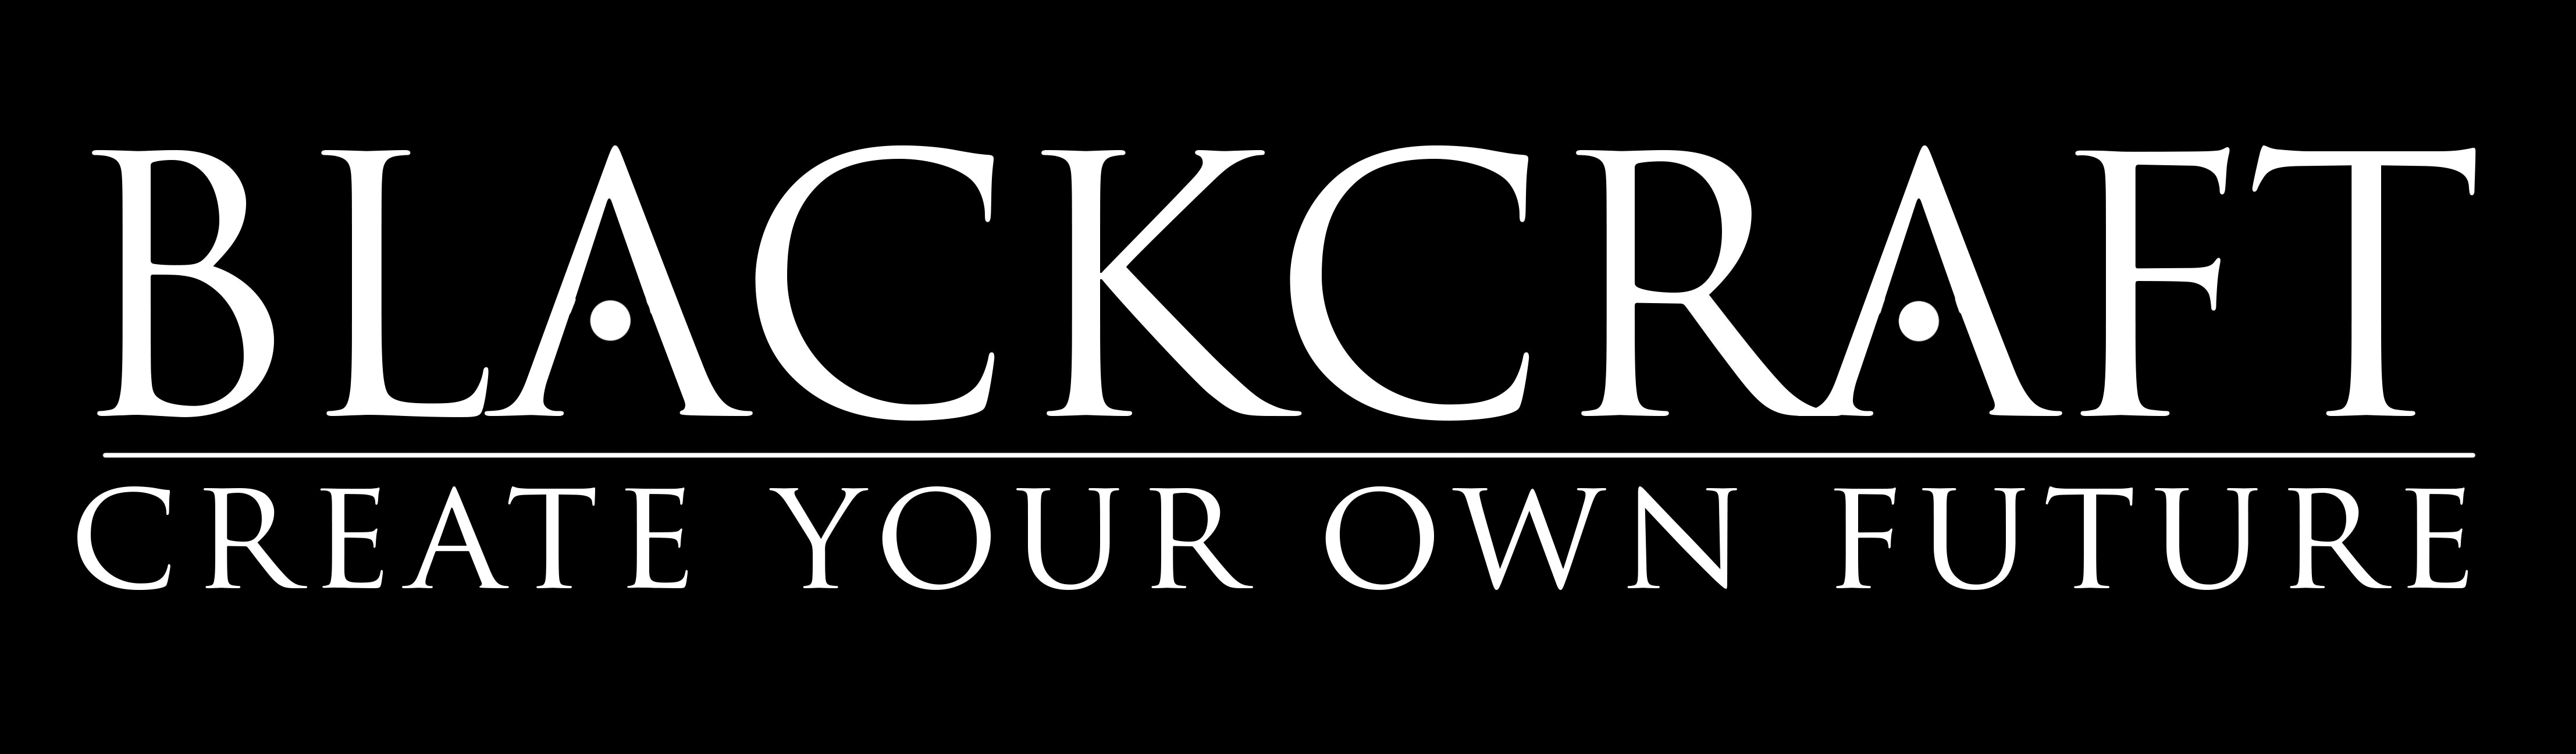 Blackcraft - 'Hocus Pocus' - Leggings back in stock!🎃 FREE SHIPPING! Use  code DEVIL. www.blackcraftcult.com #blackcraftcult